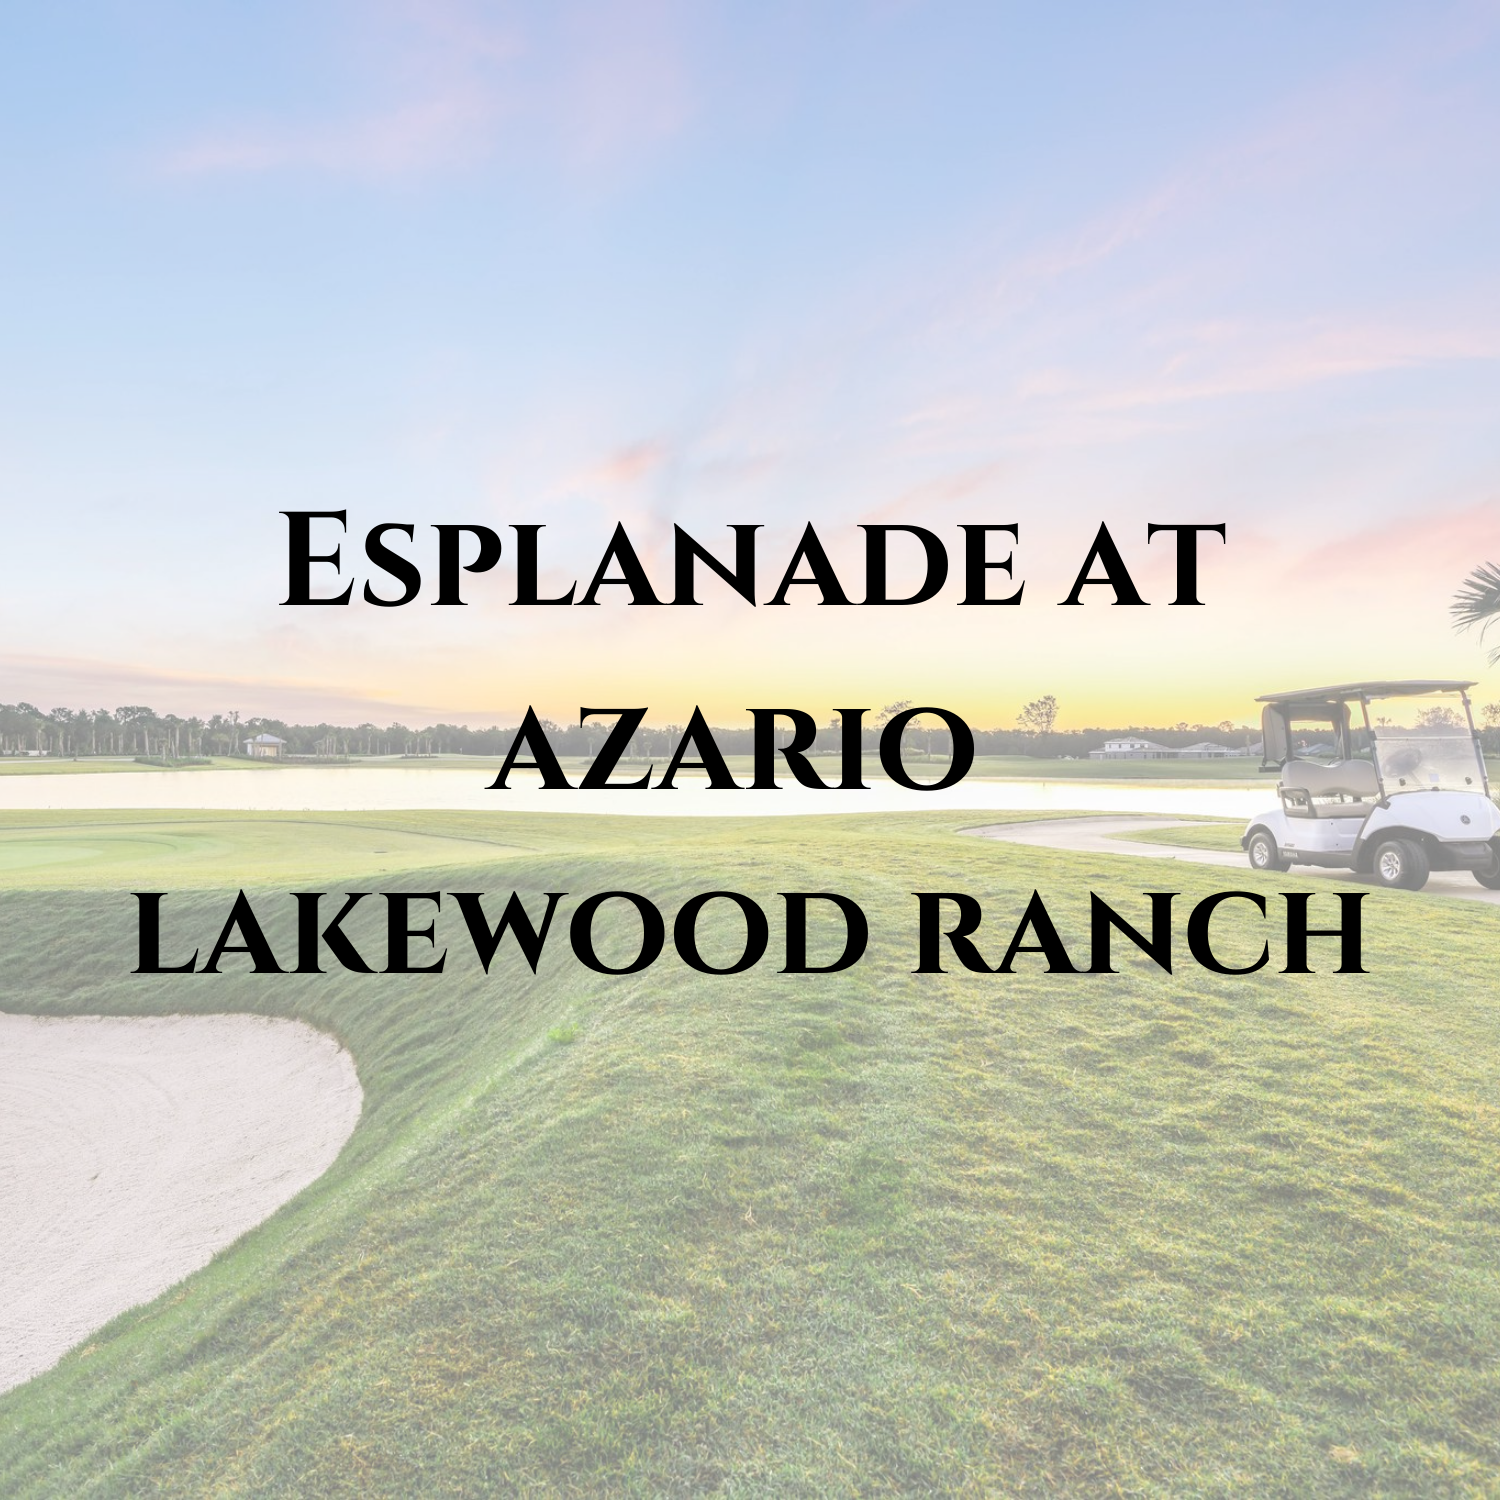 Esplanade at Azario Lakewood Ranch Template 1x1 for golf course button.png